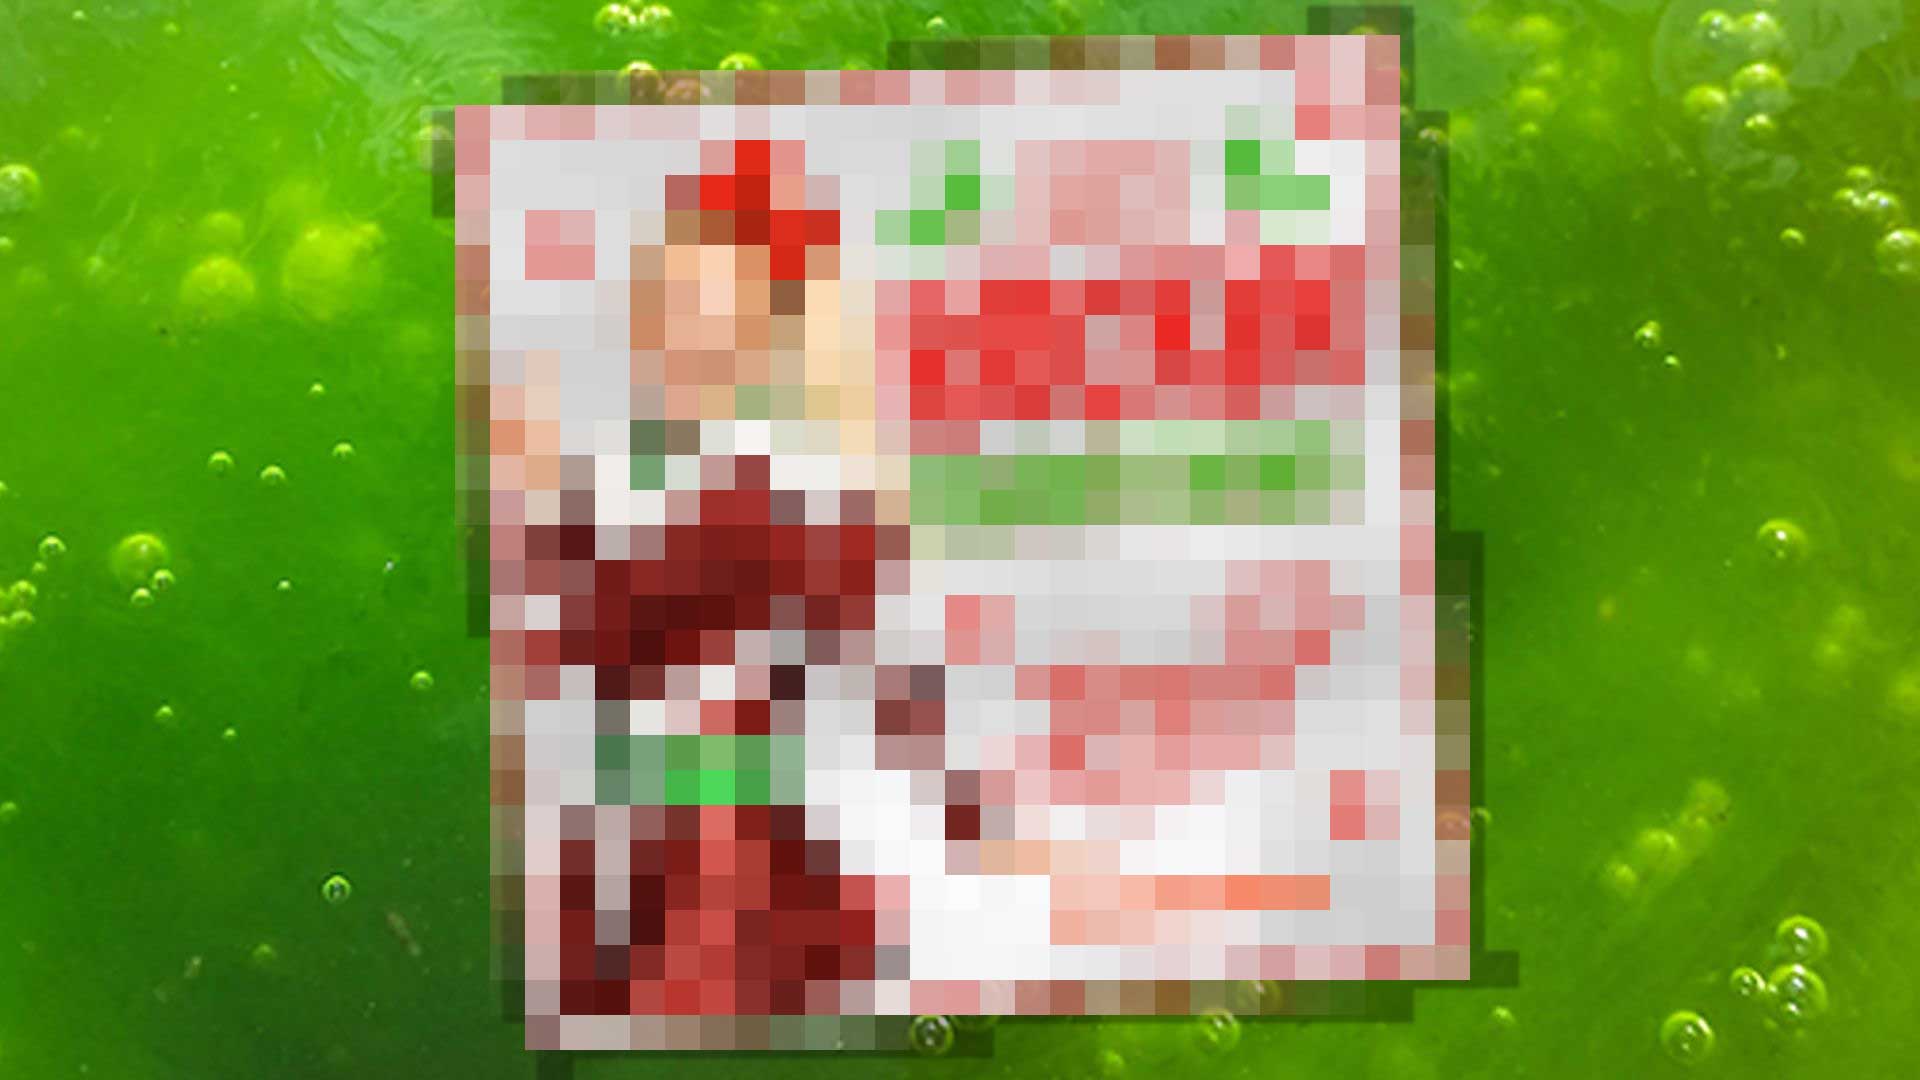 A blurred image of JoJo Siwa's Christmas album